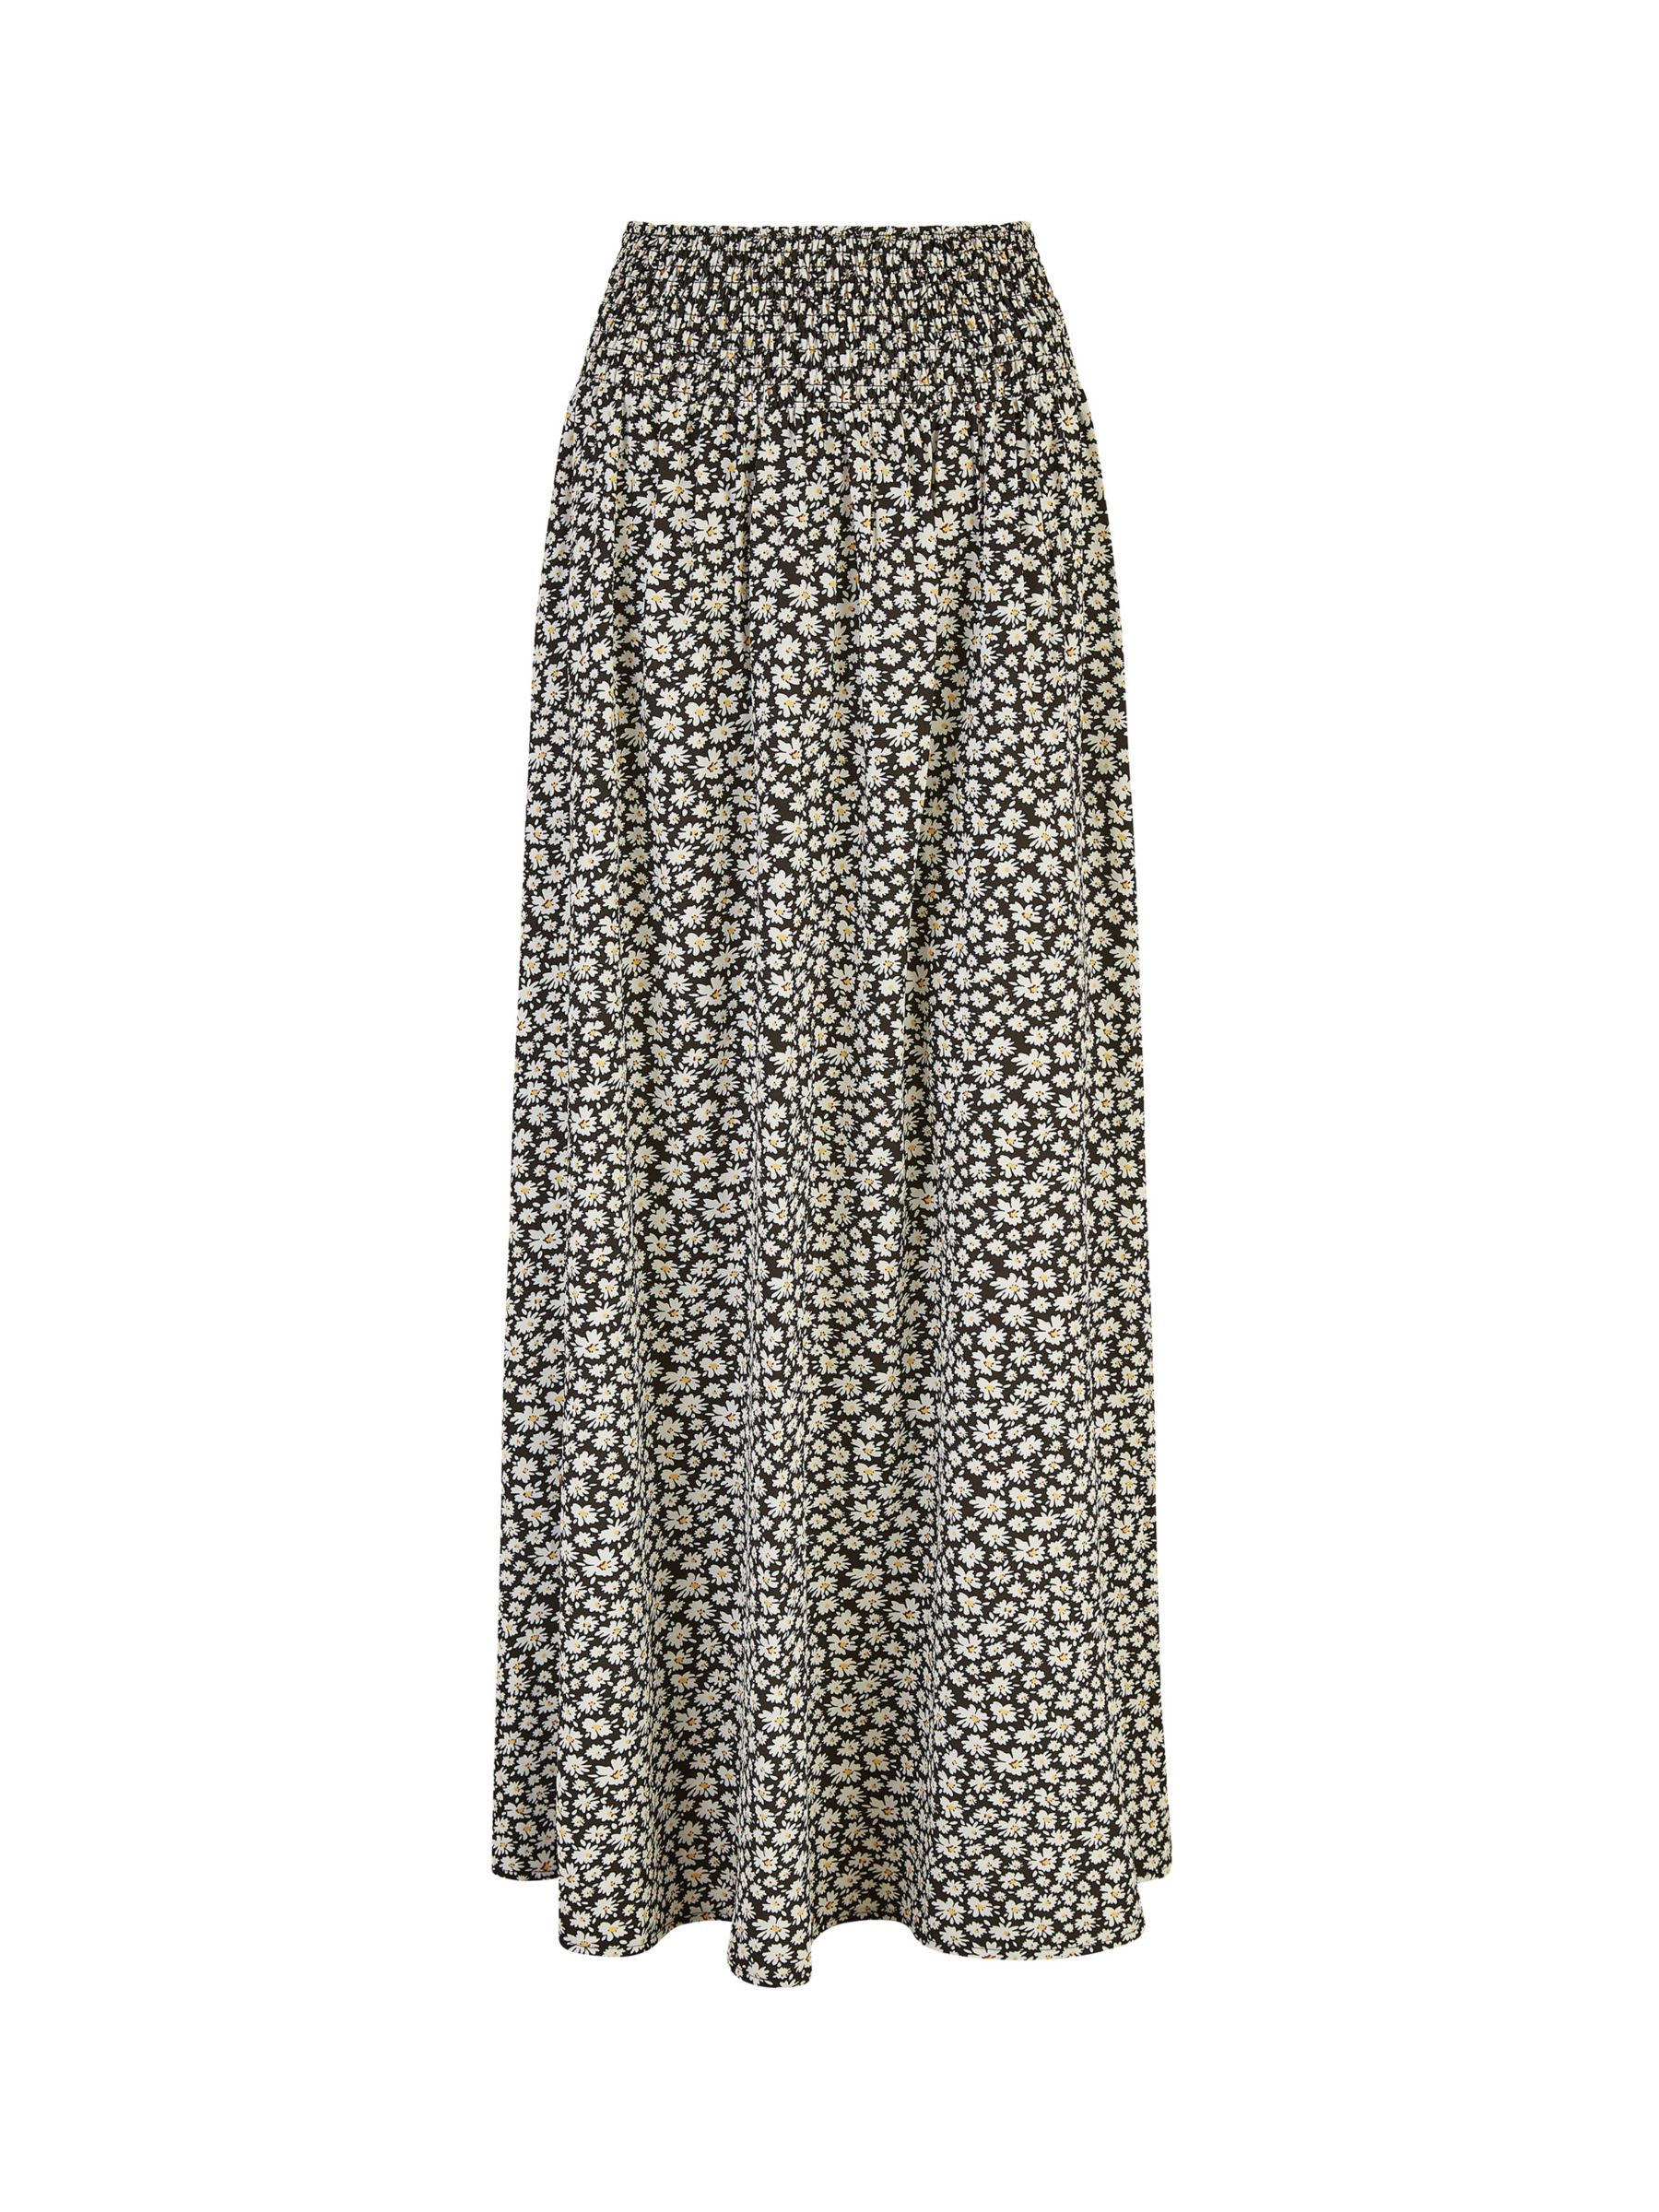 Mela London Daisy Ruched Split Hem Maxi Skirt, Black/Multi, S